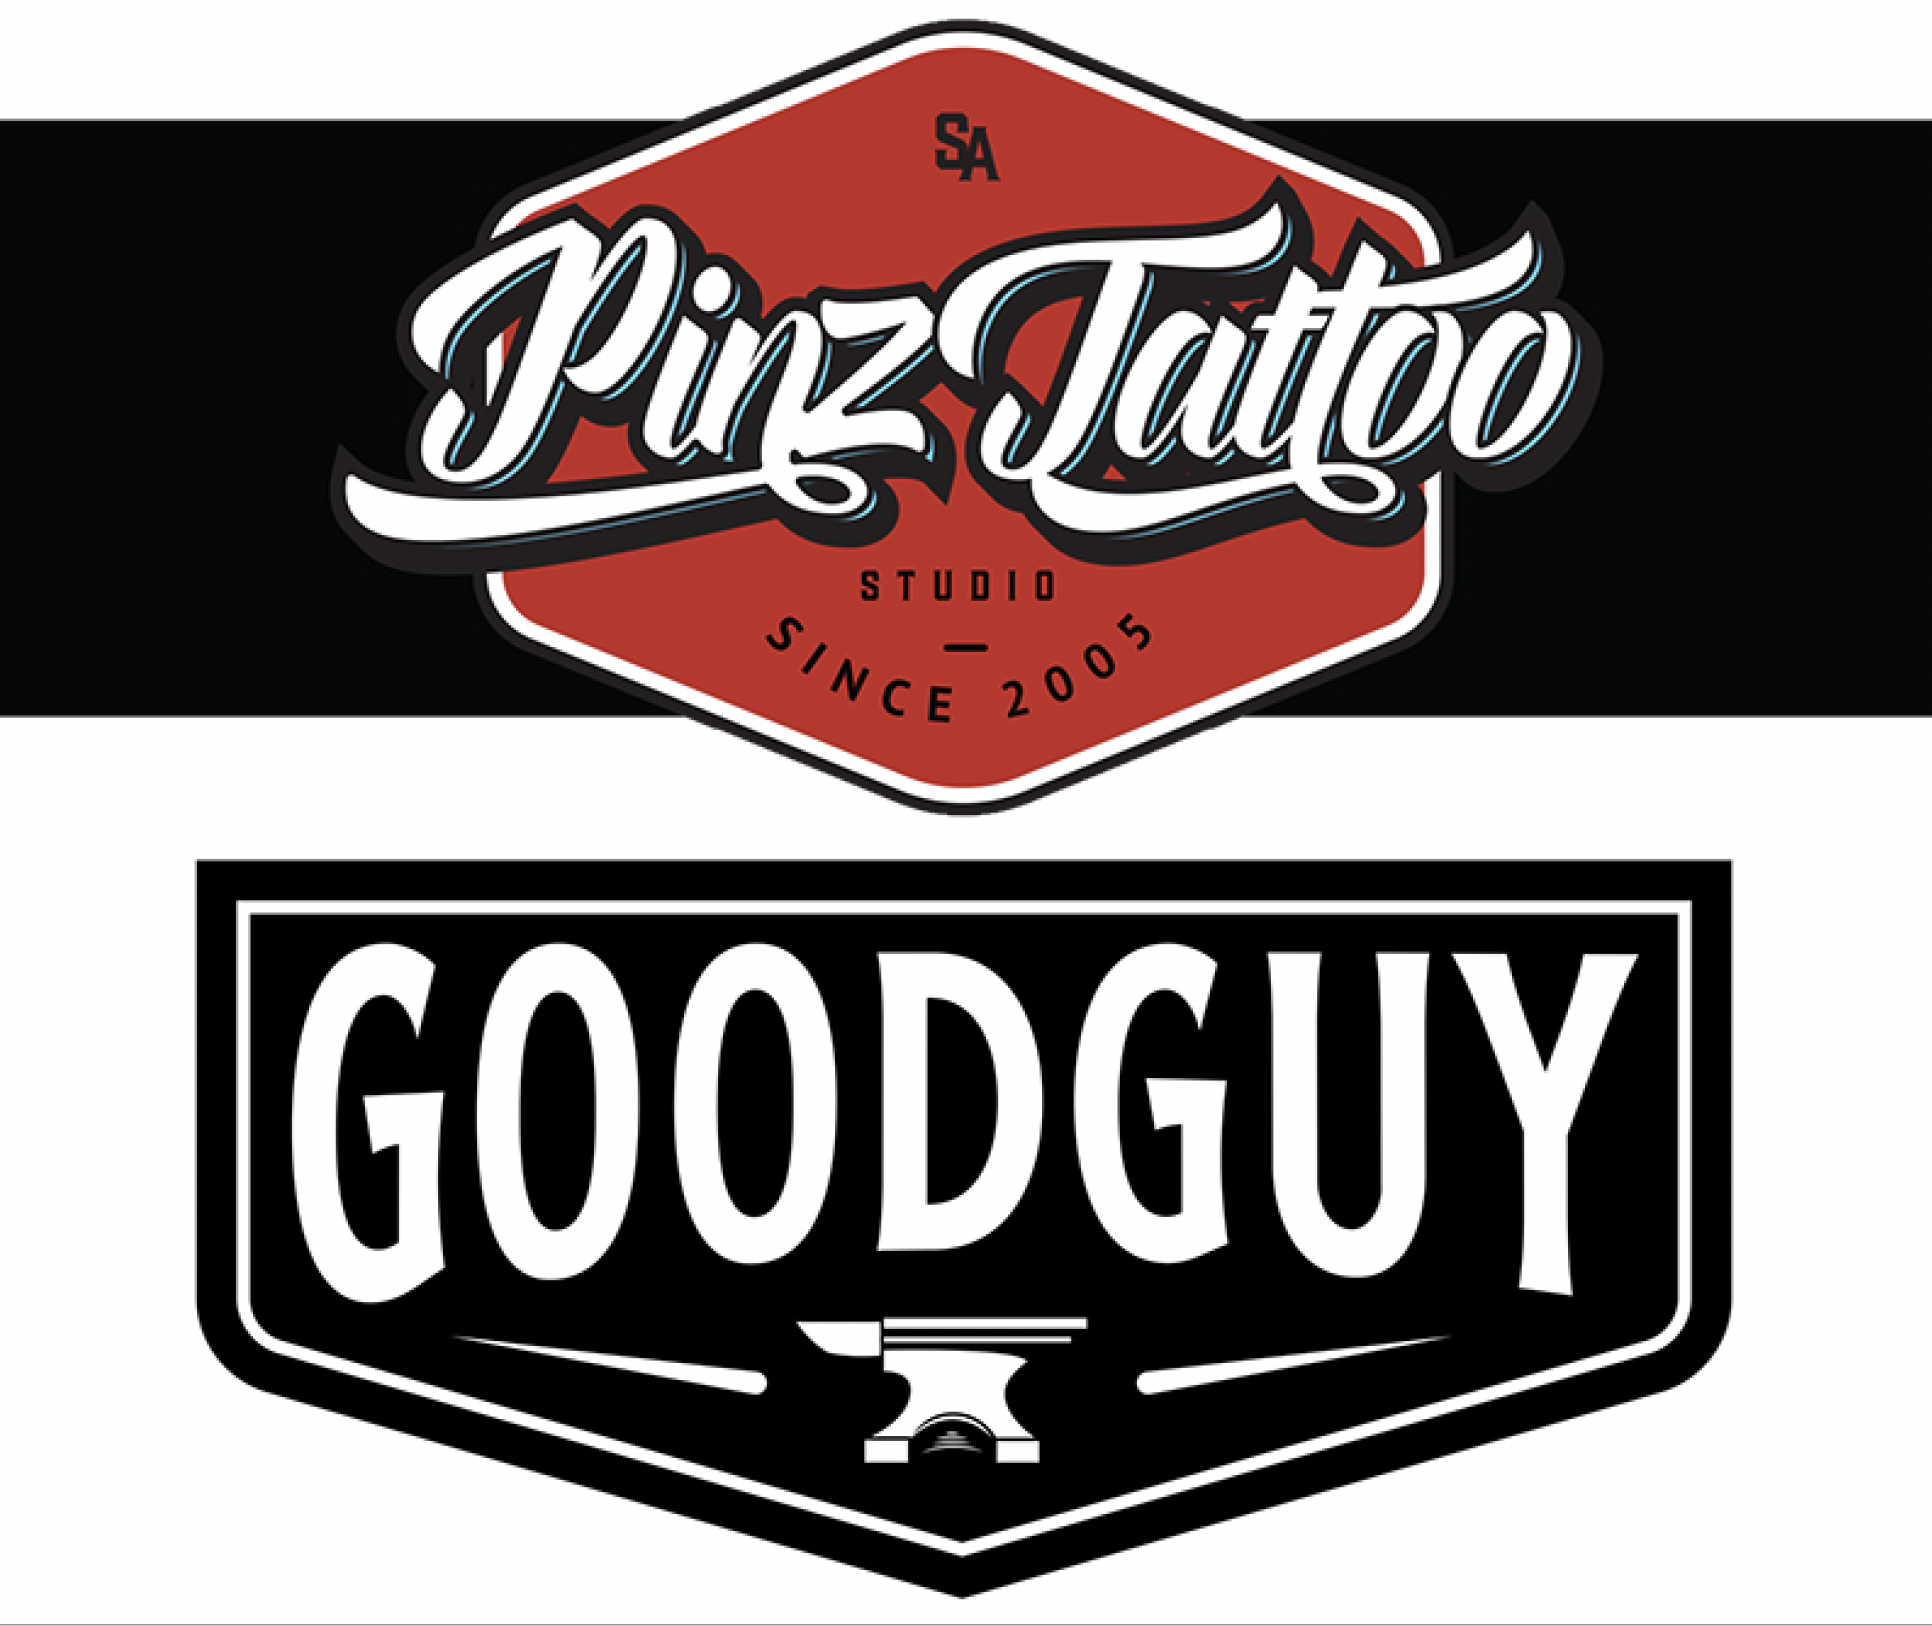 Good Guy/Pinz